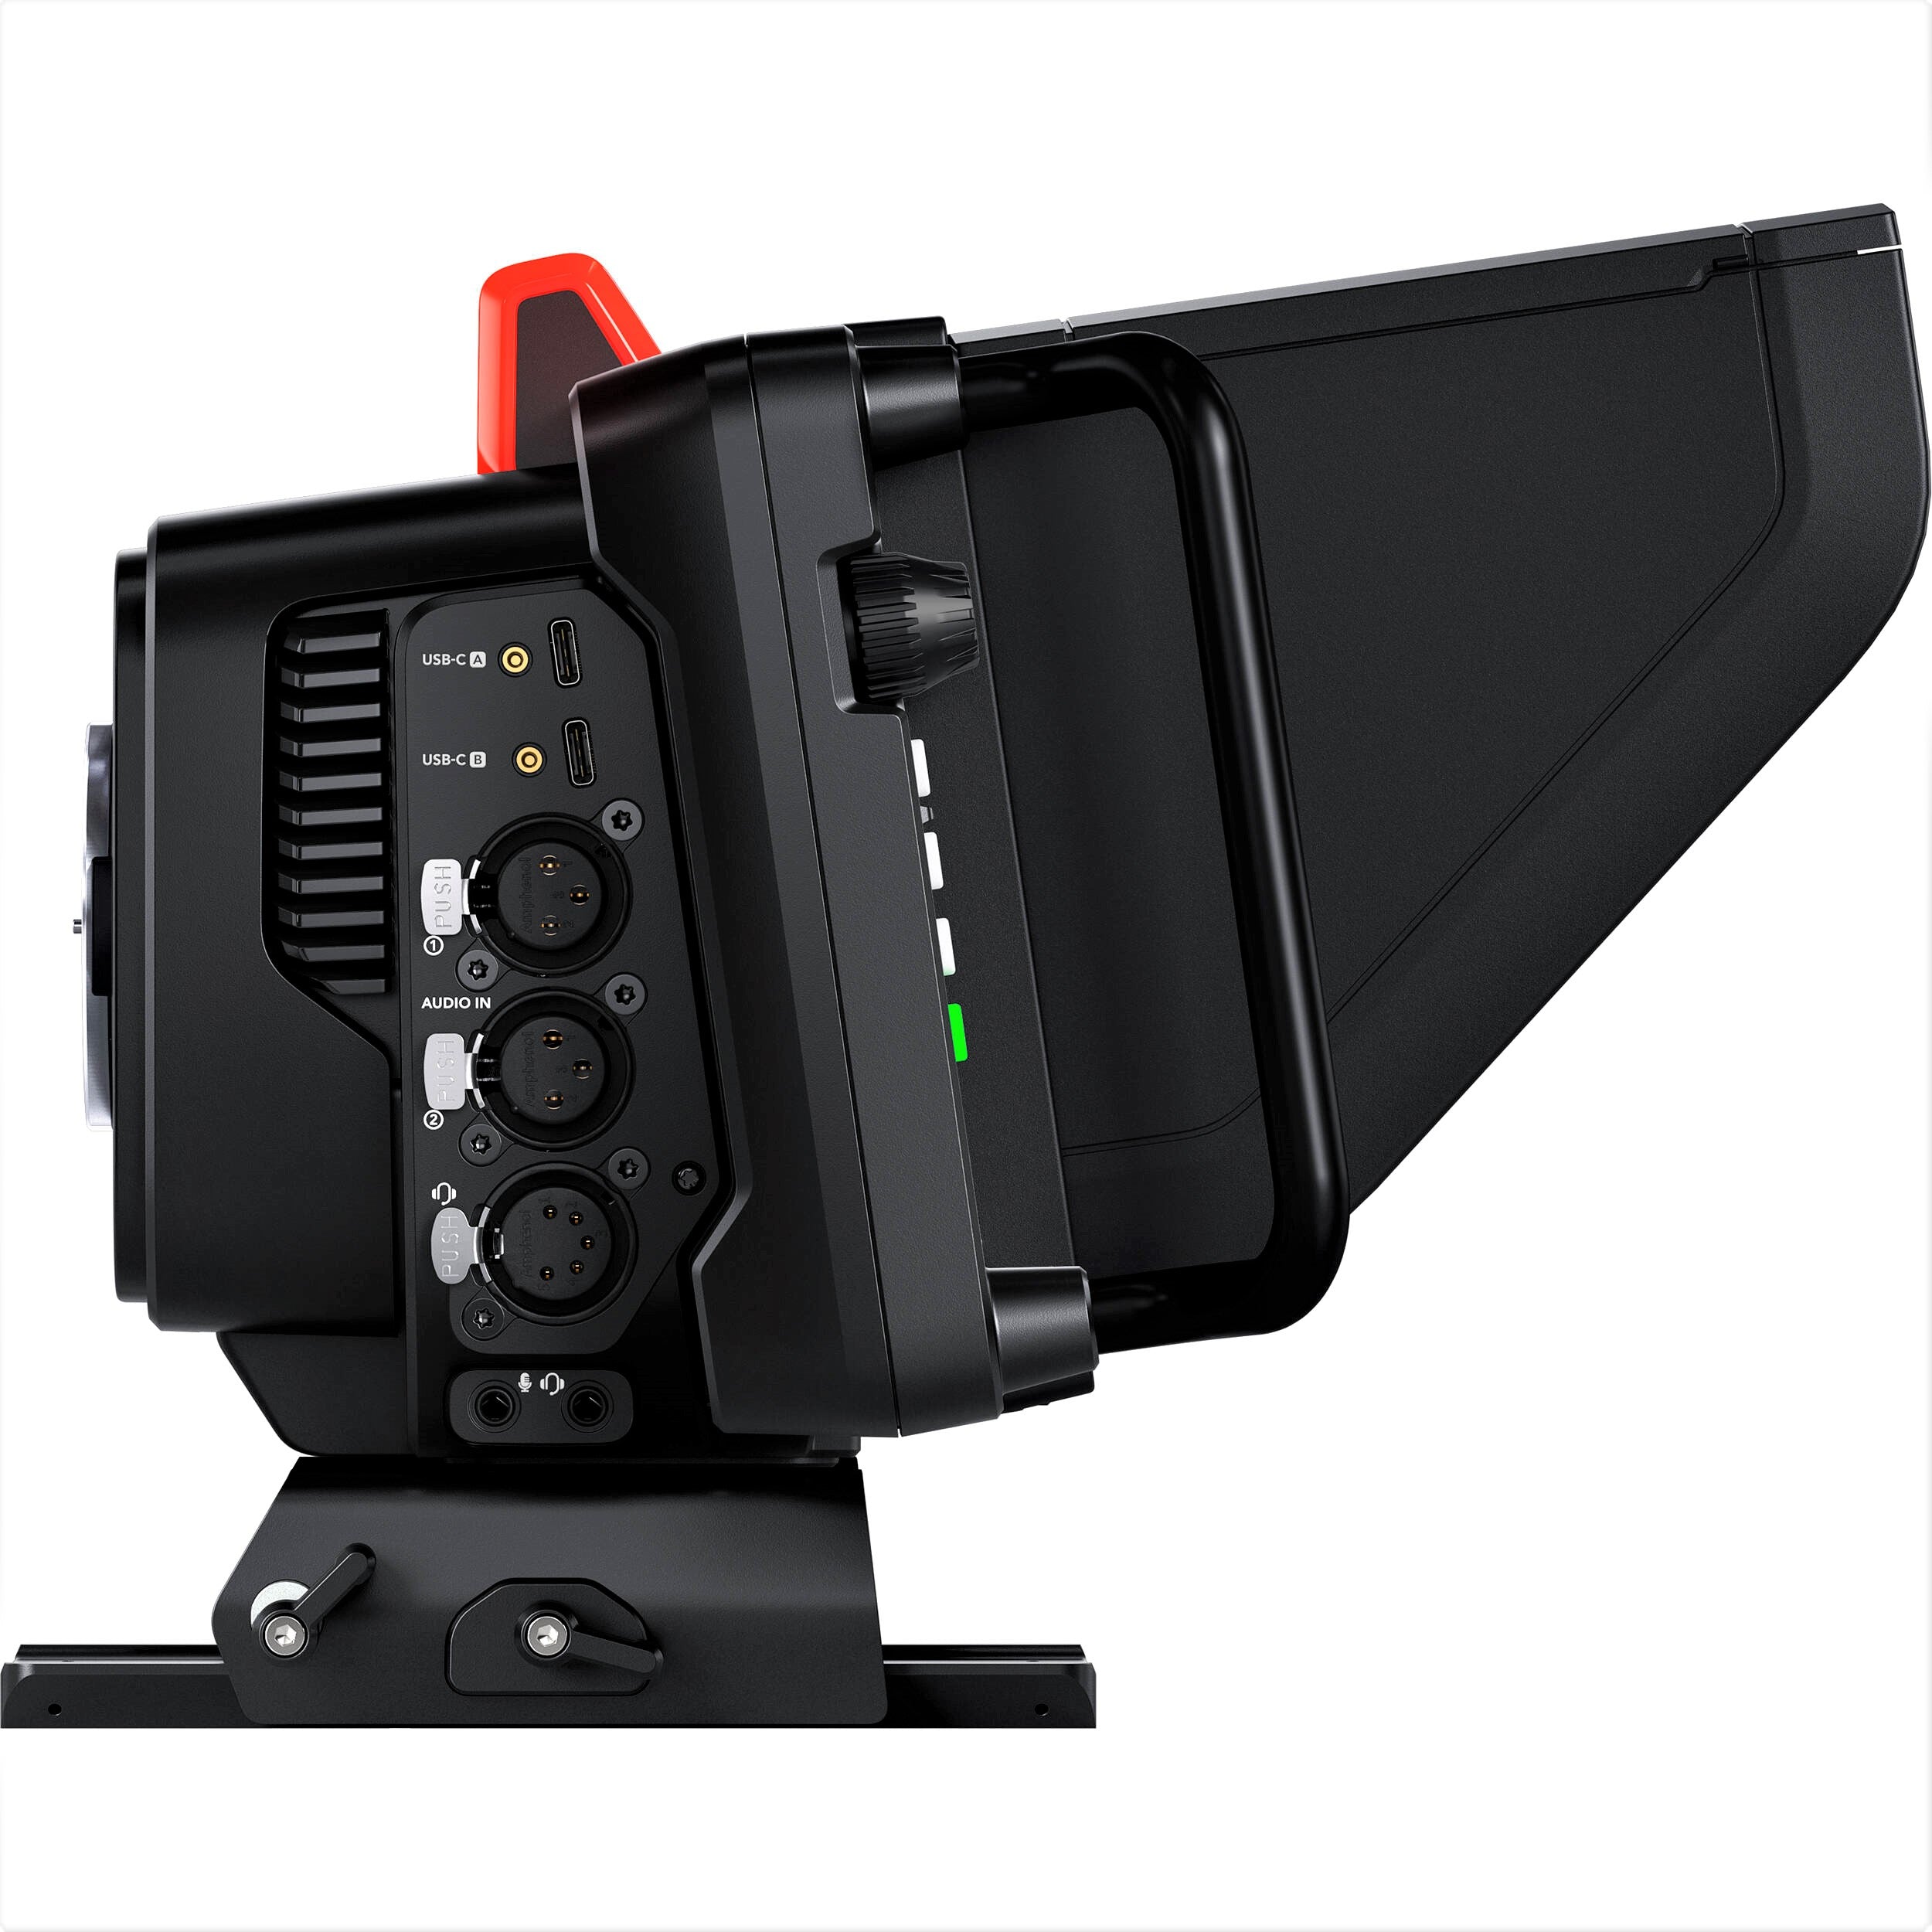 Blackmagic Design Studio Camera 4K Pro G2 - Side View